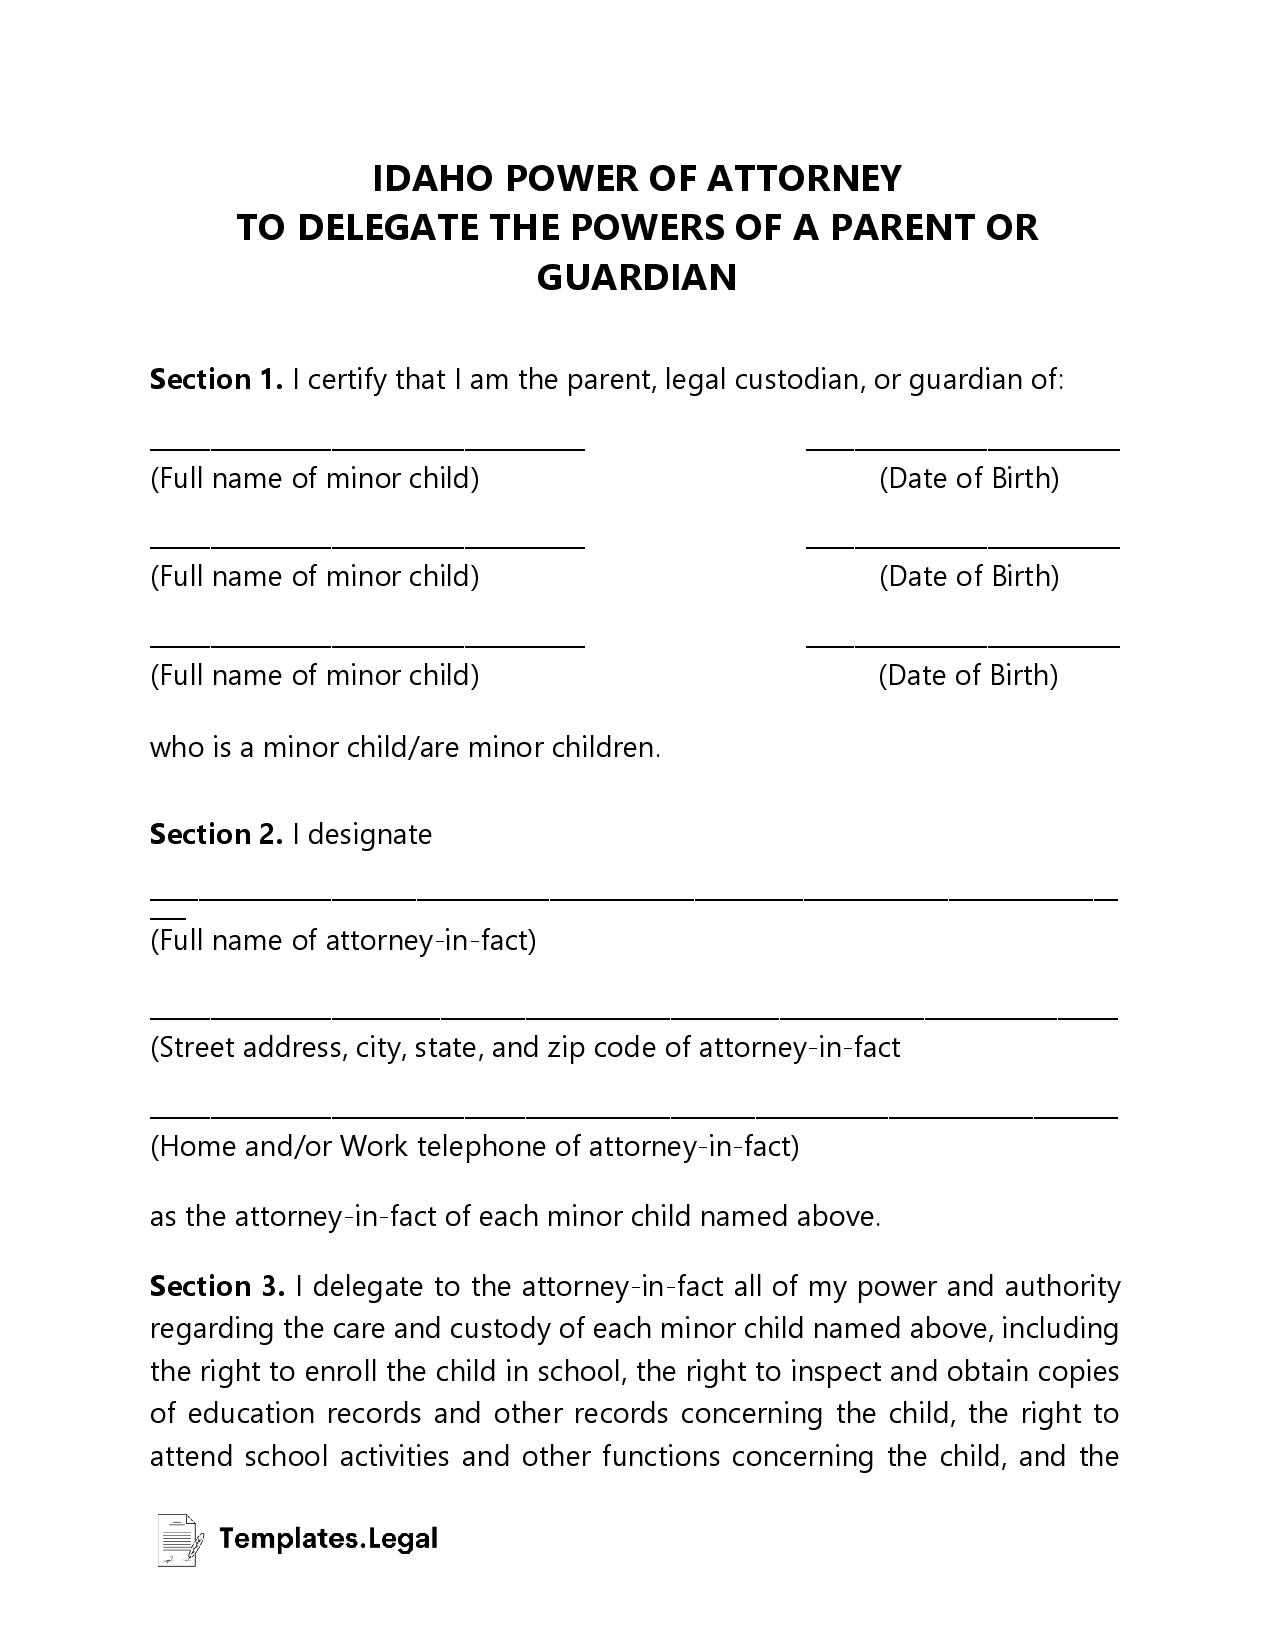 Idaho Minor (Child) Power of Attorney - Templates.Legal